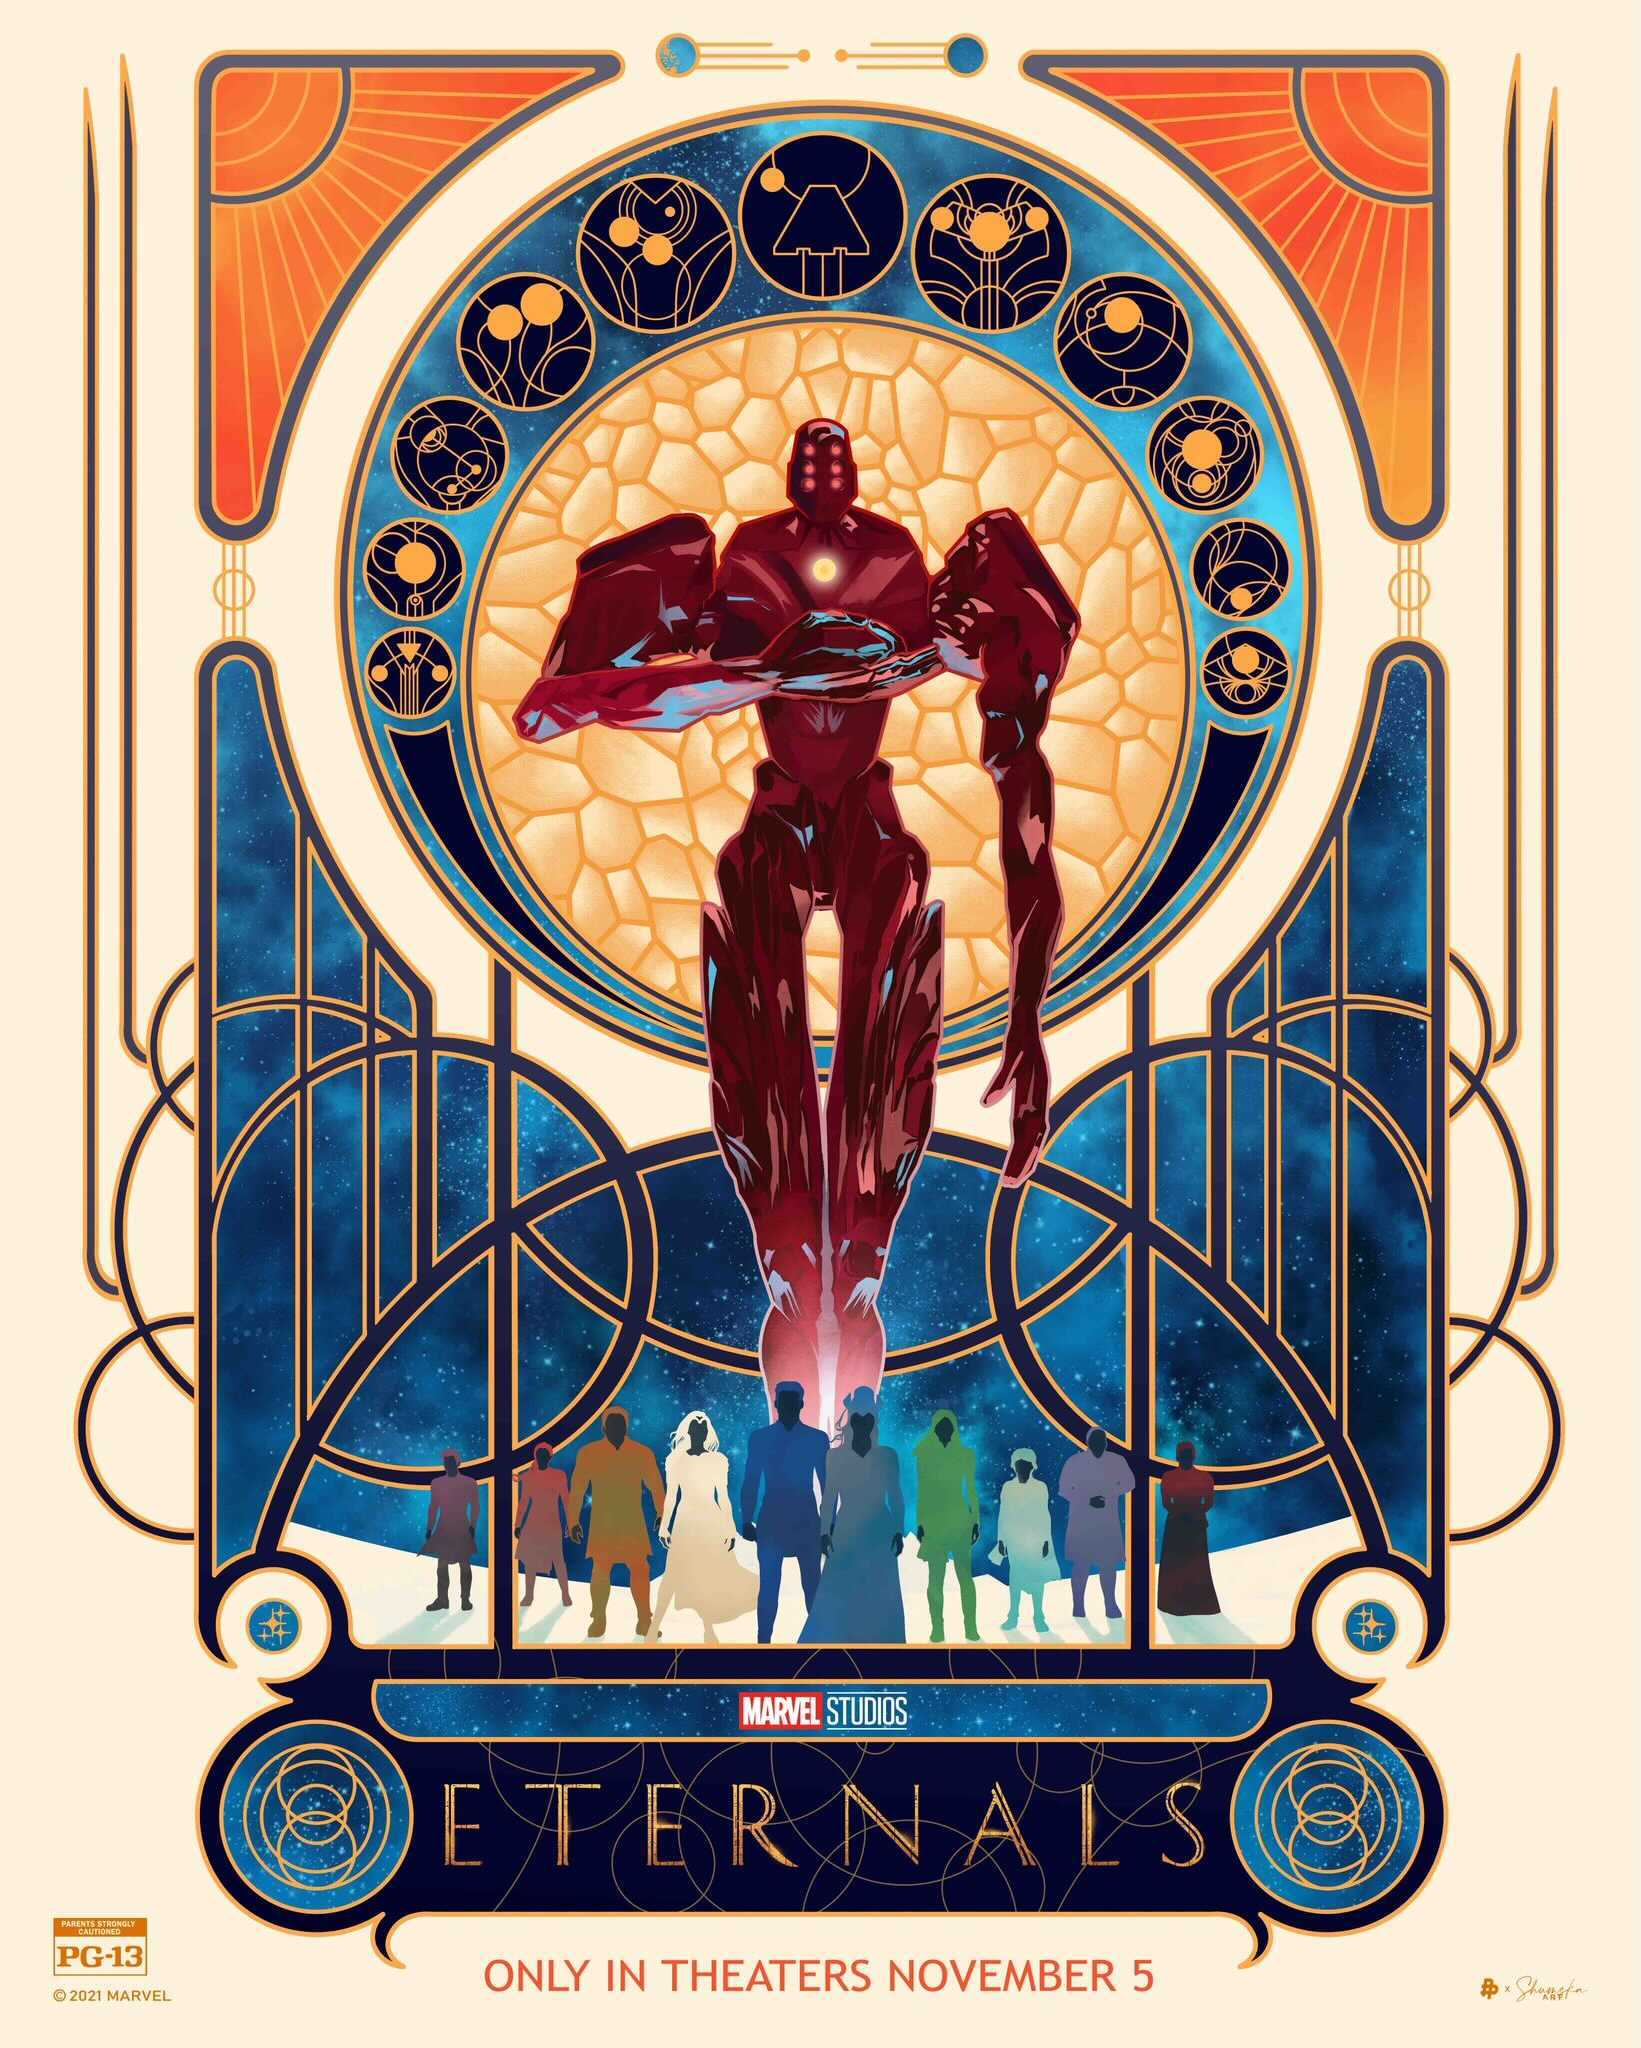 Alternate_Eternals_Film_Poster_releasedby_MarvelStudios.jpg